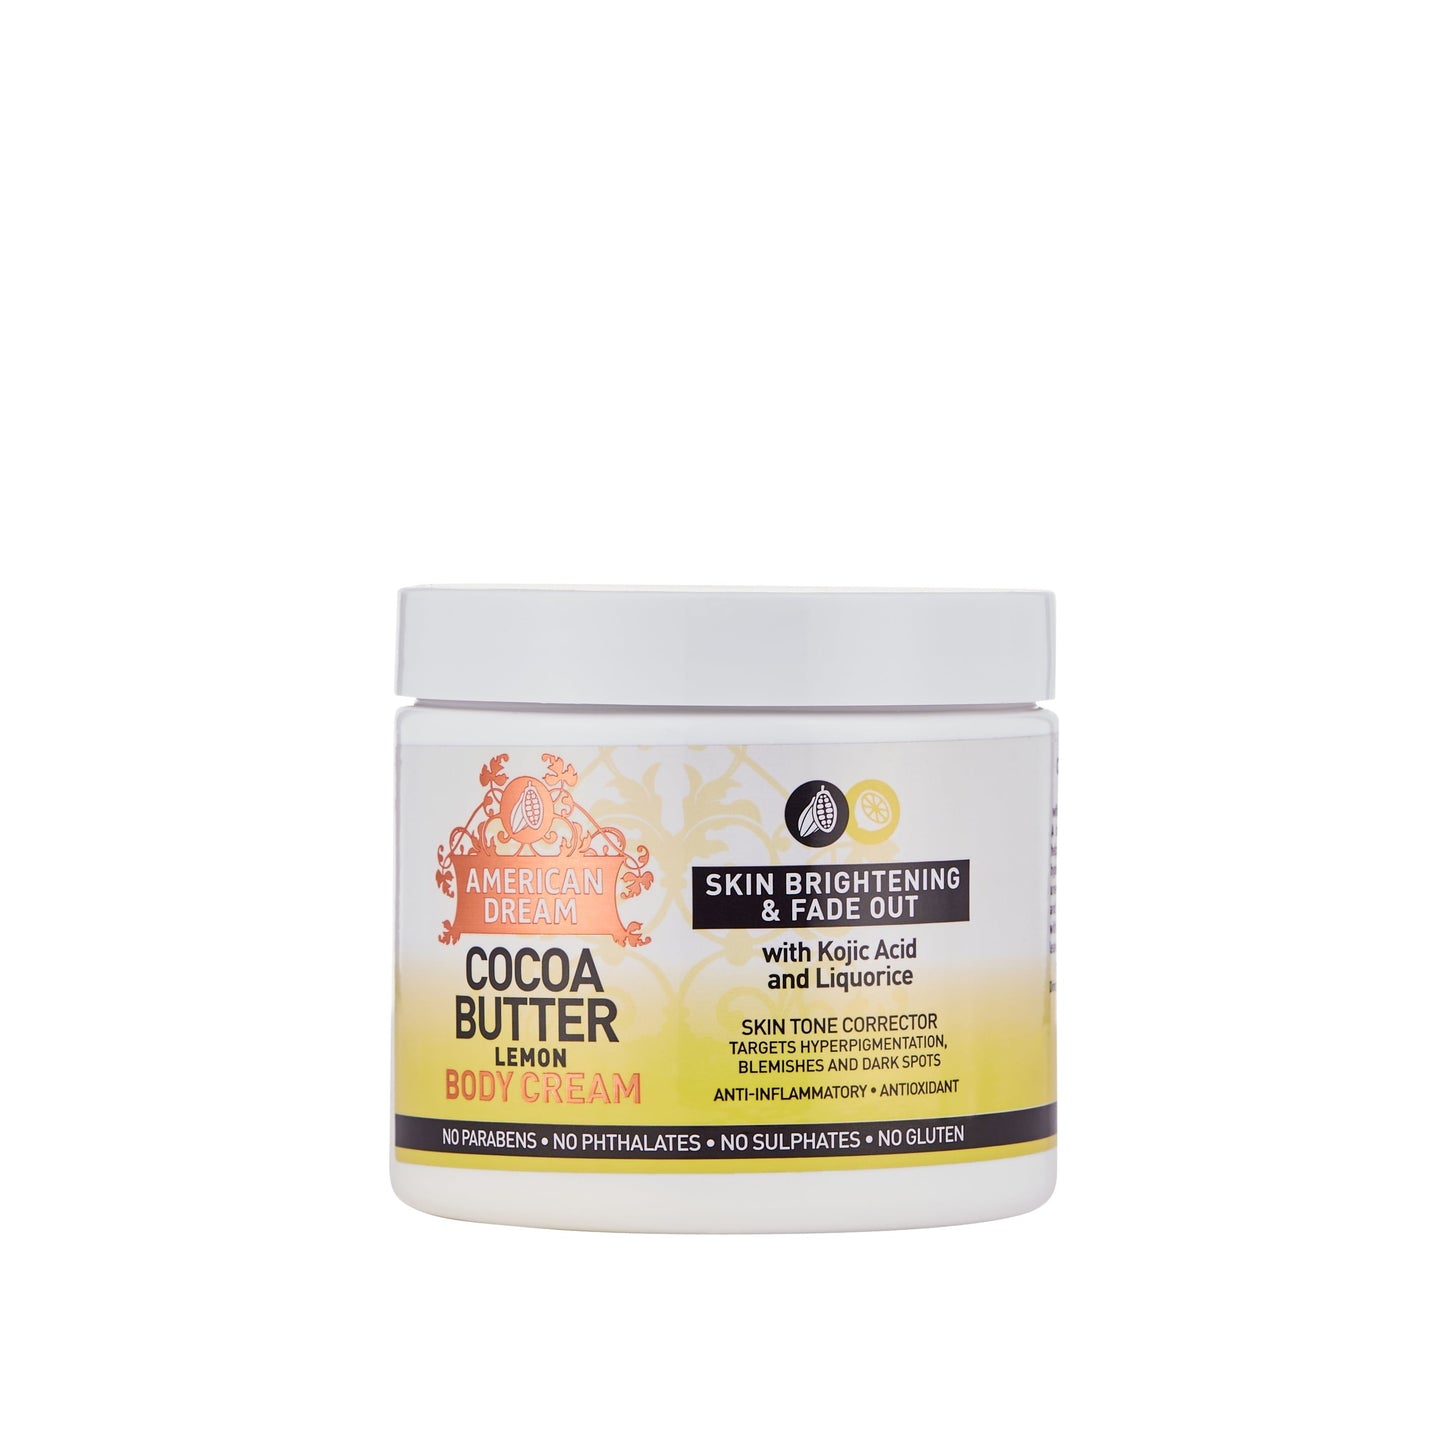 American Dream Cocoa Butter Lemon Body Cream with Kojic Acid and Liquorice